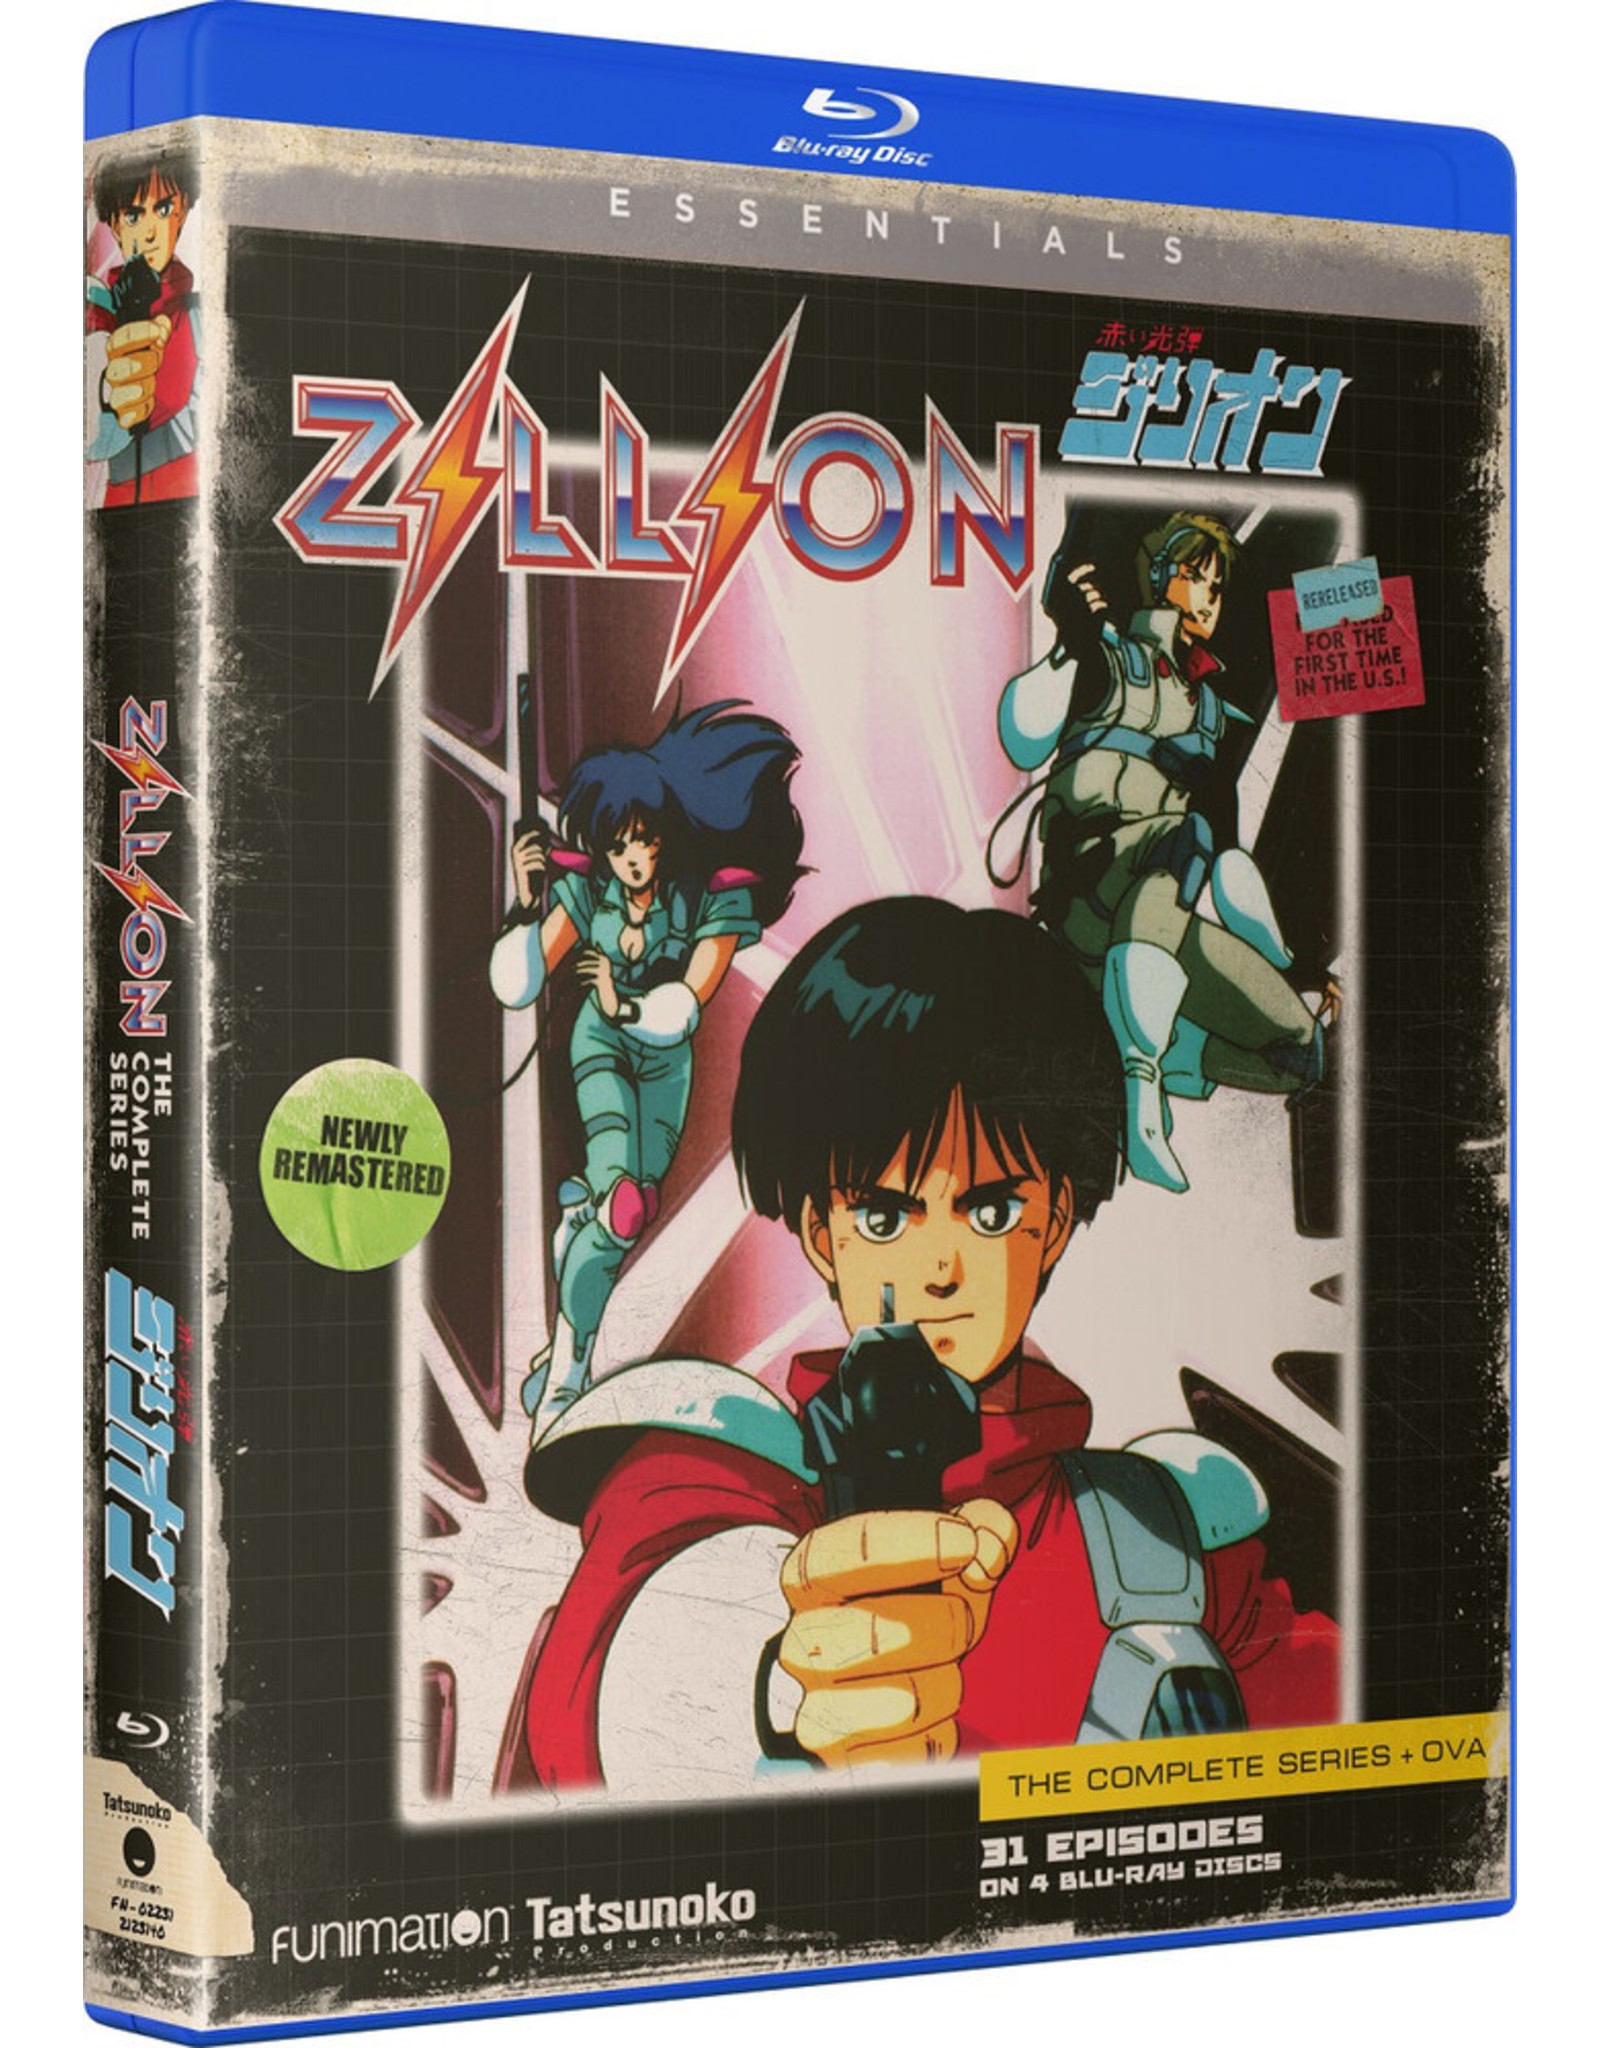 Zillion the Complete Series + OVA Blu-ray